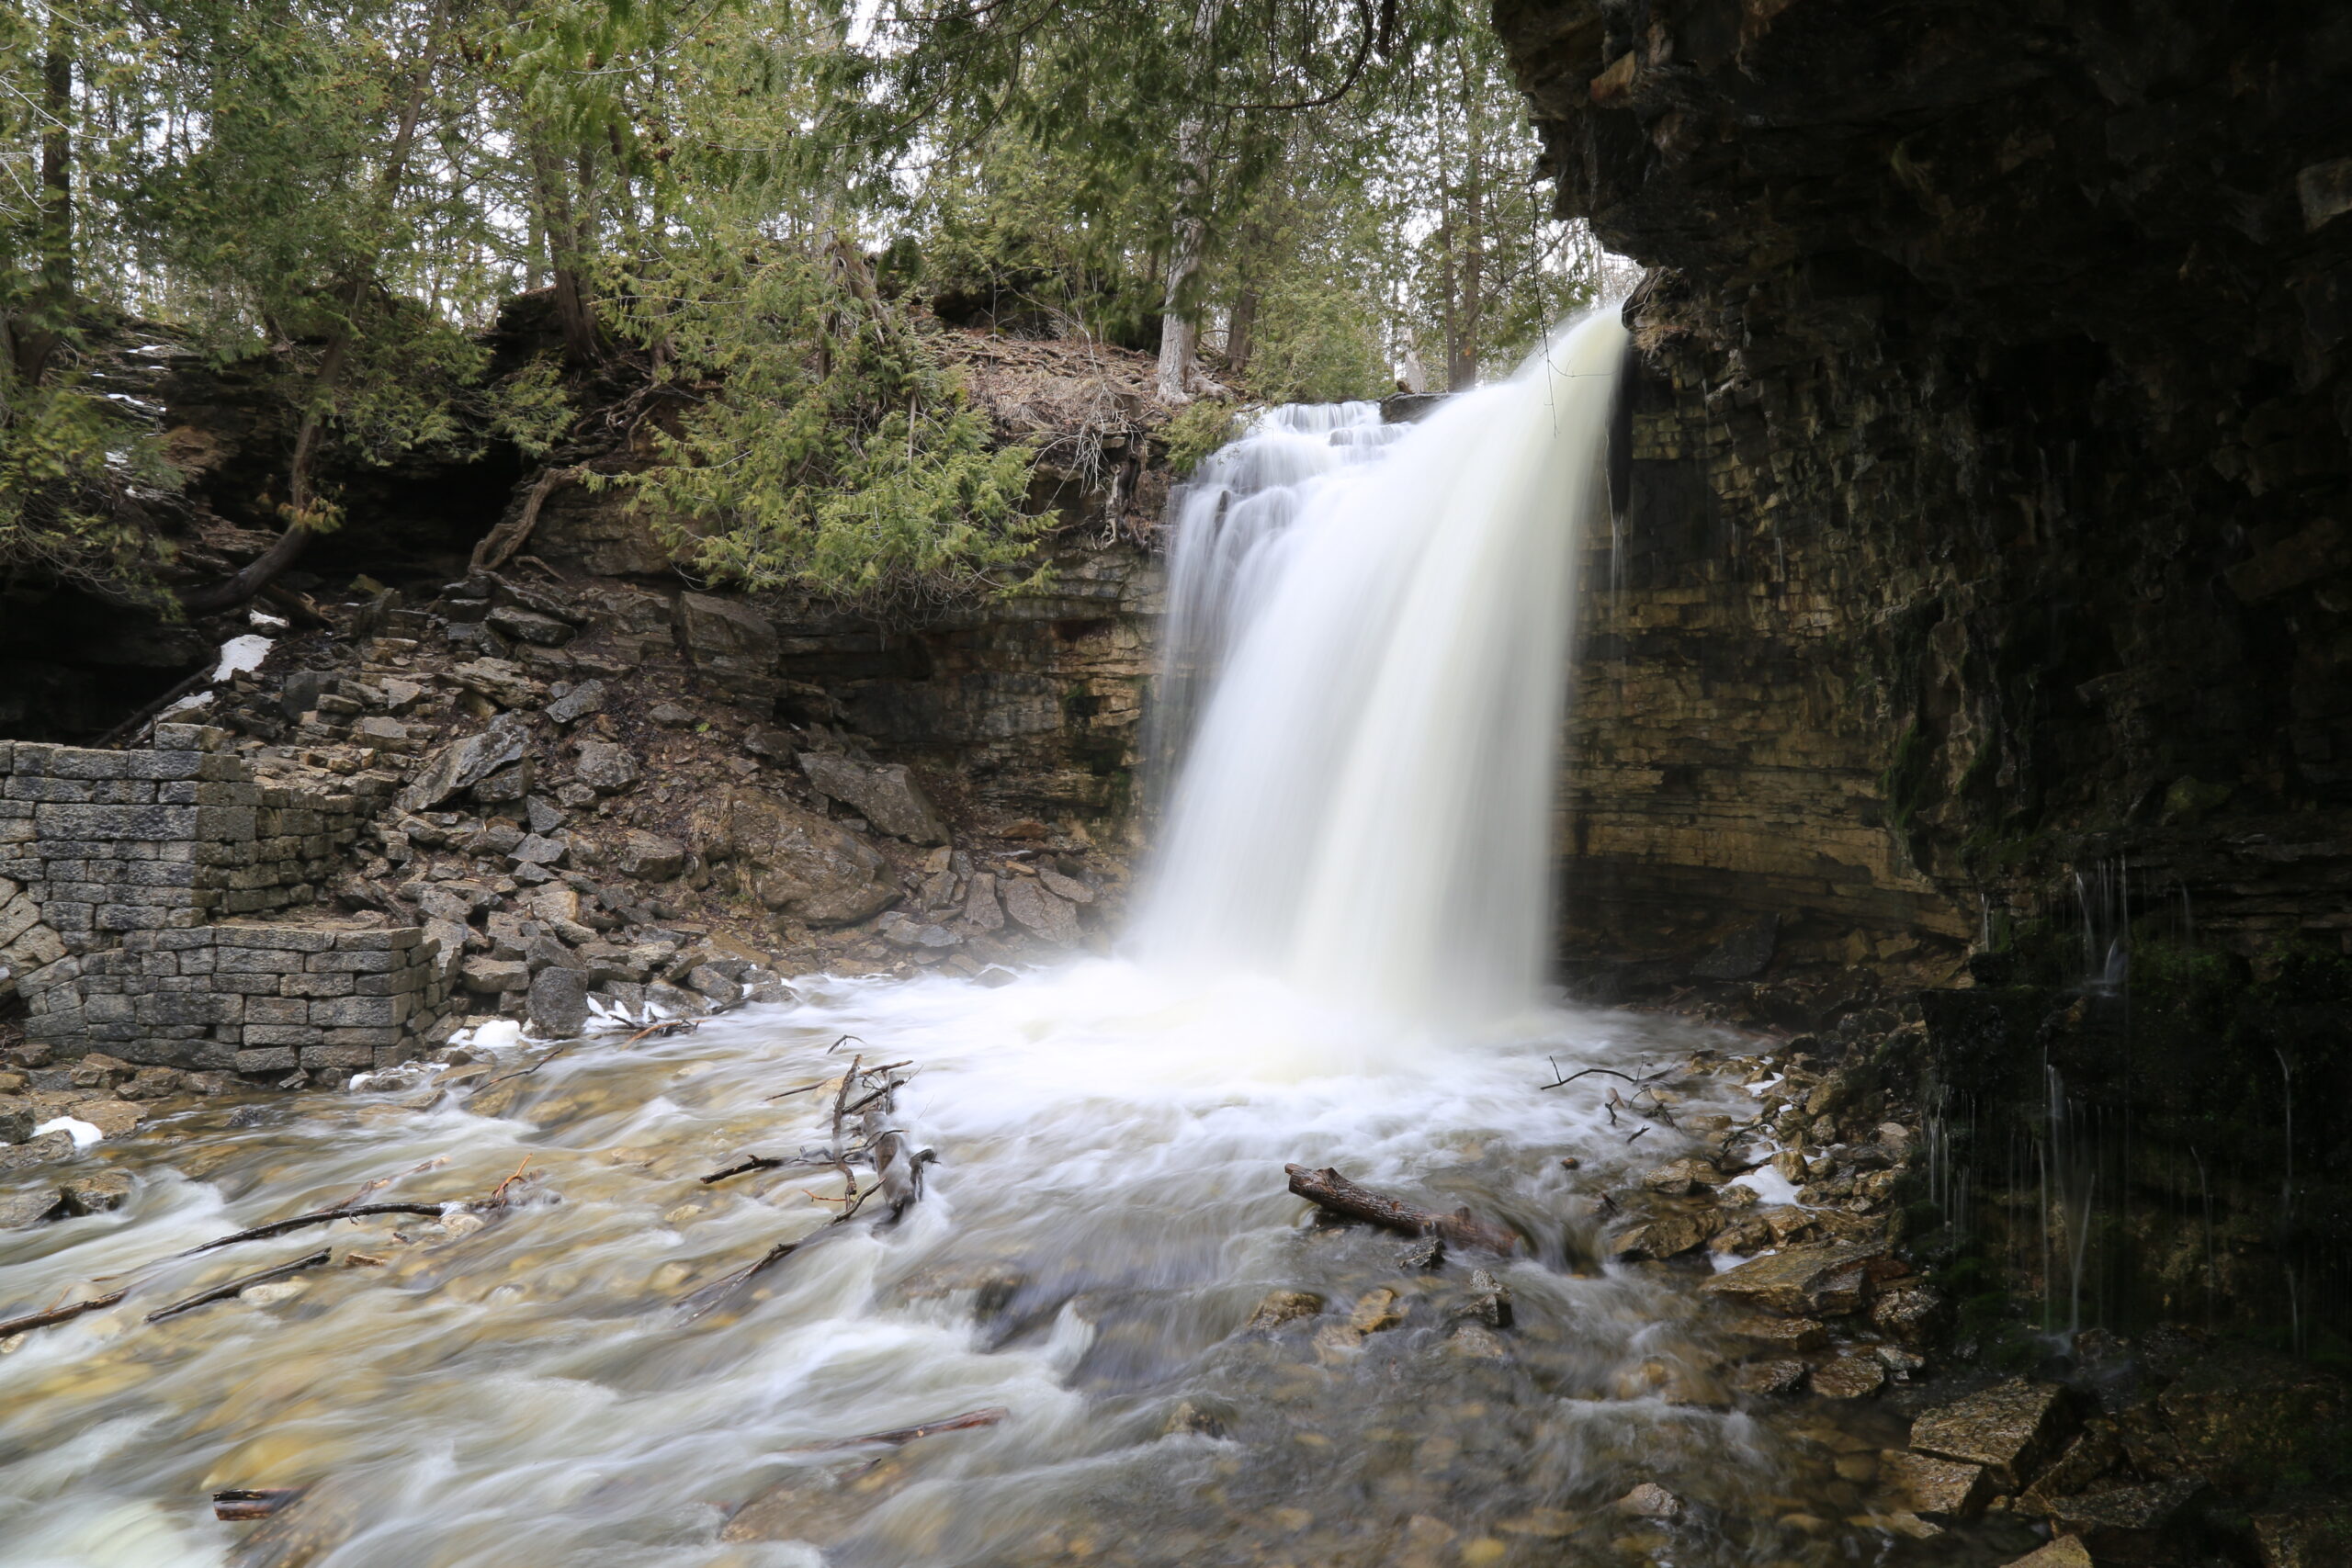 a beautiful waterfall seen at Hilton Falls park